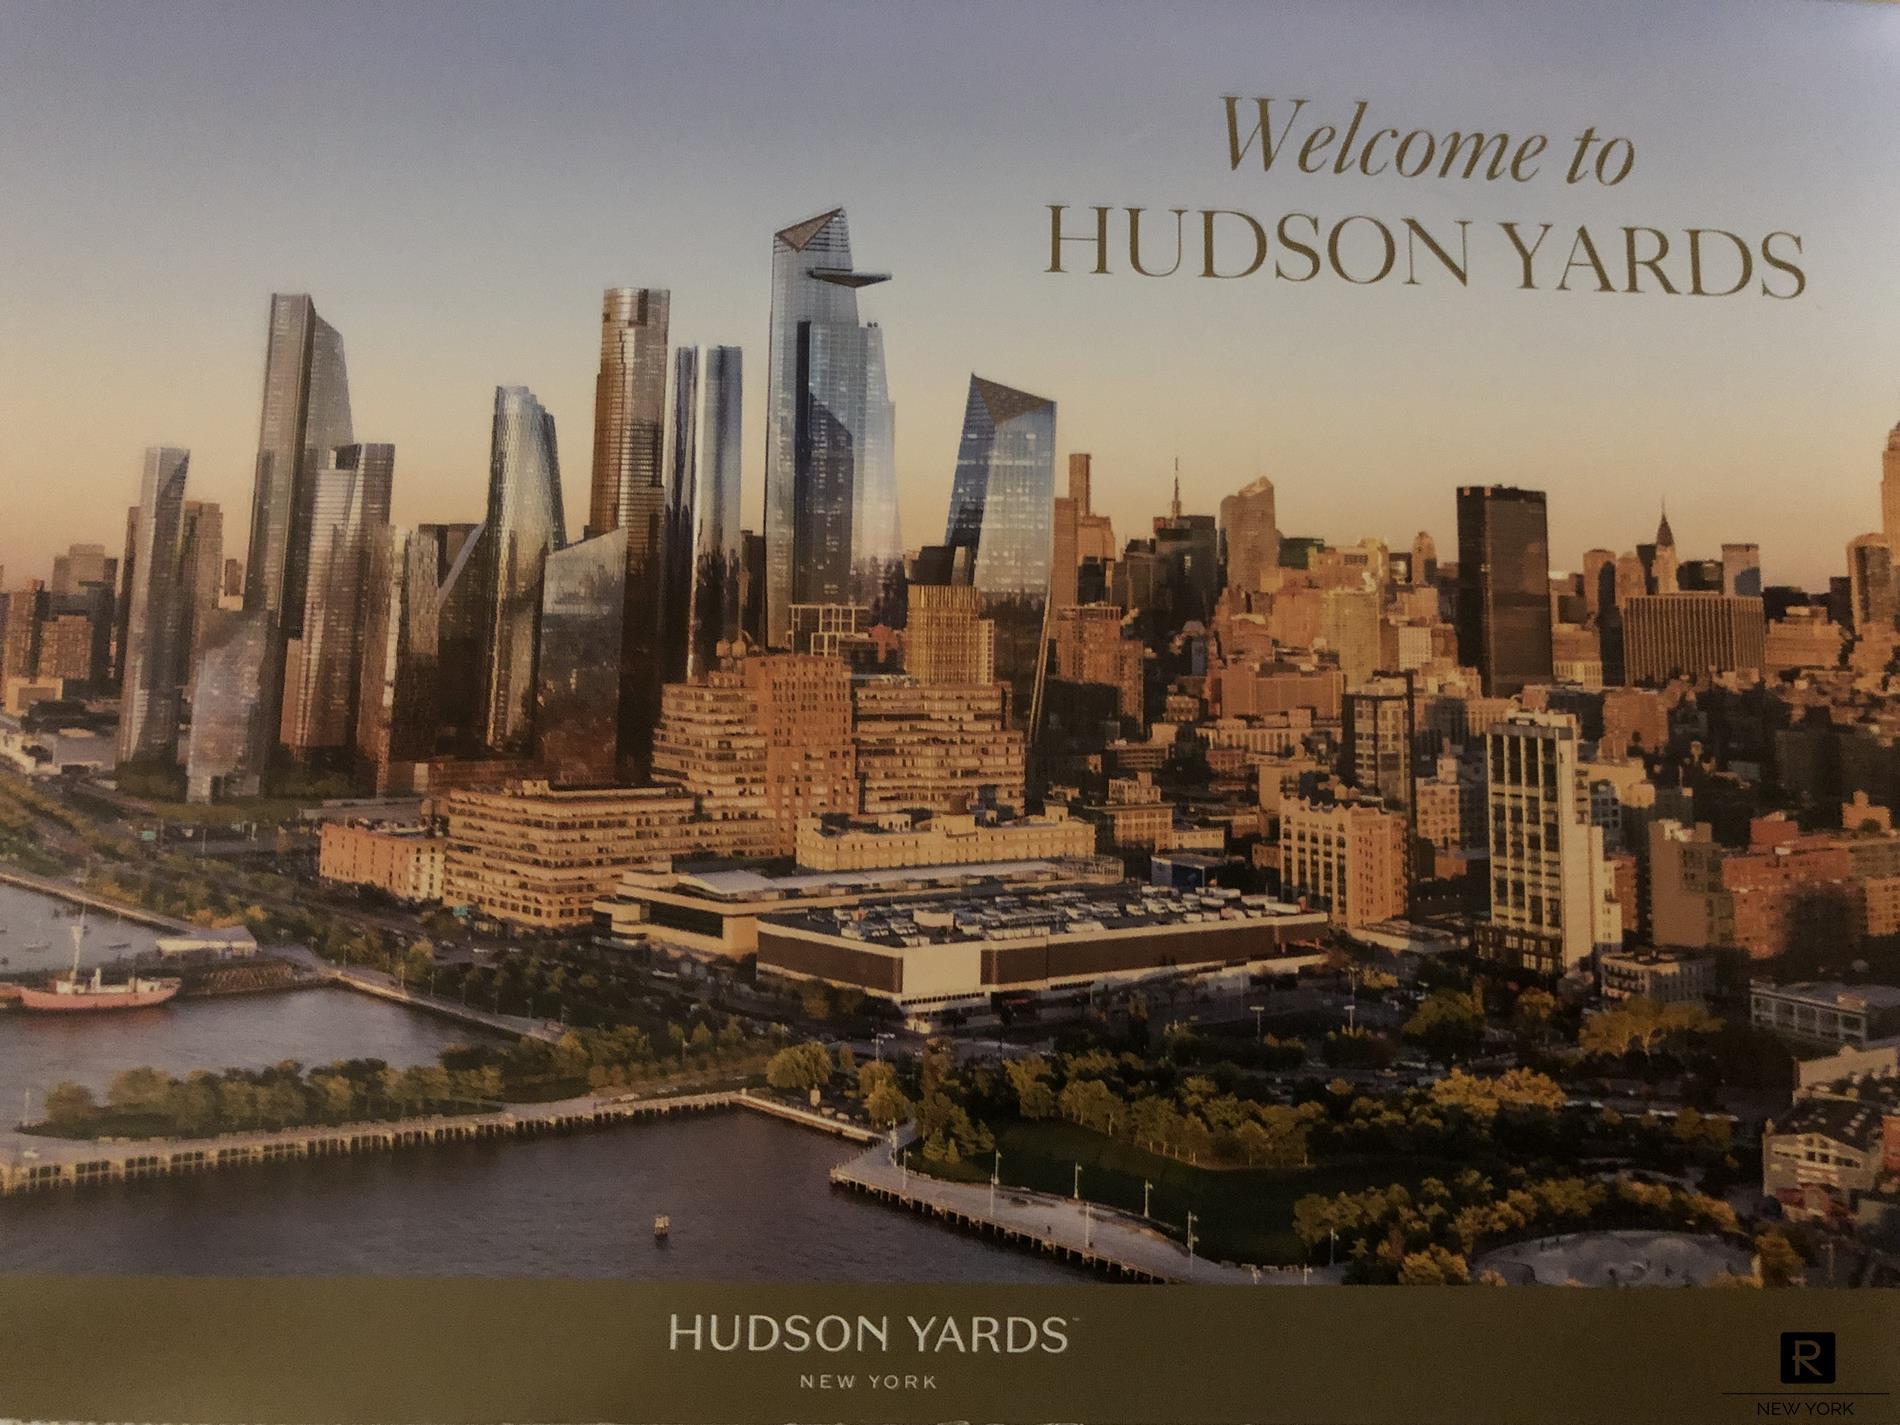 15 Hudson Yards Hudson Yards New York NY 10001